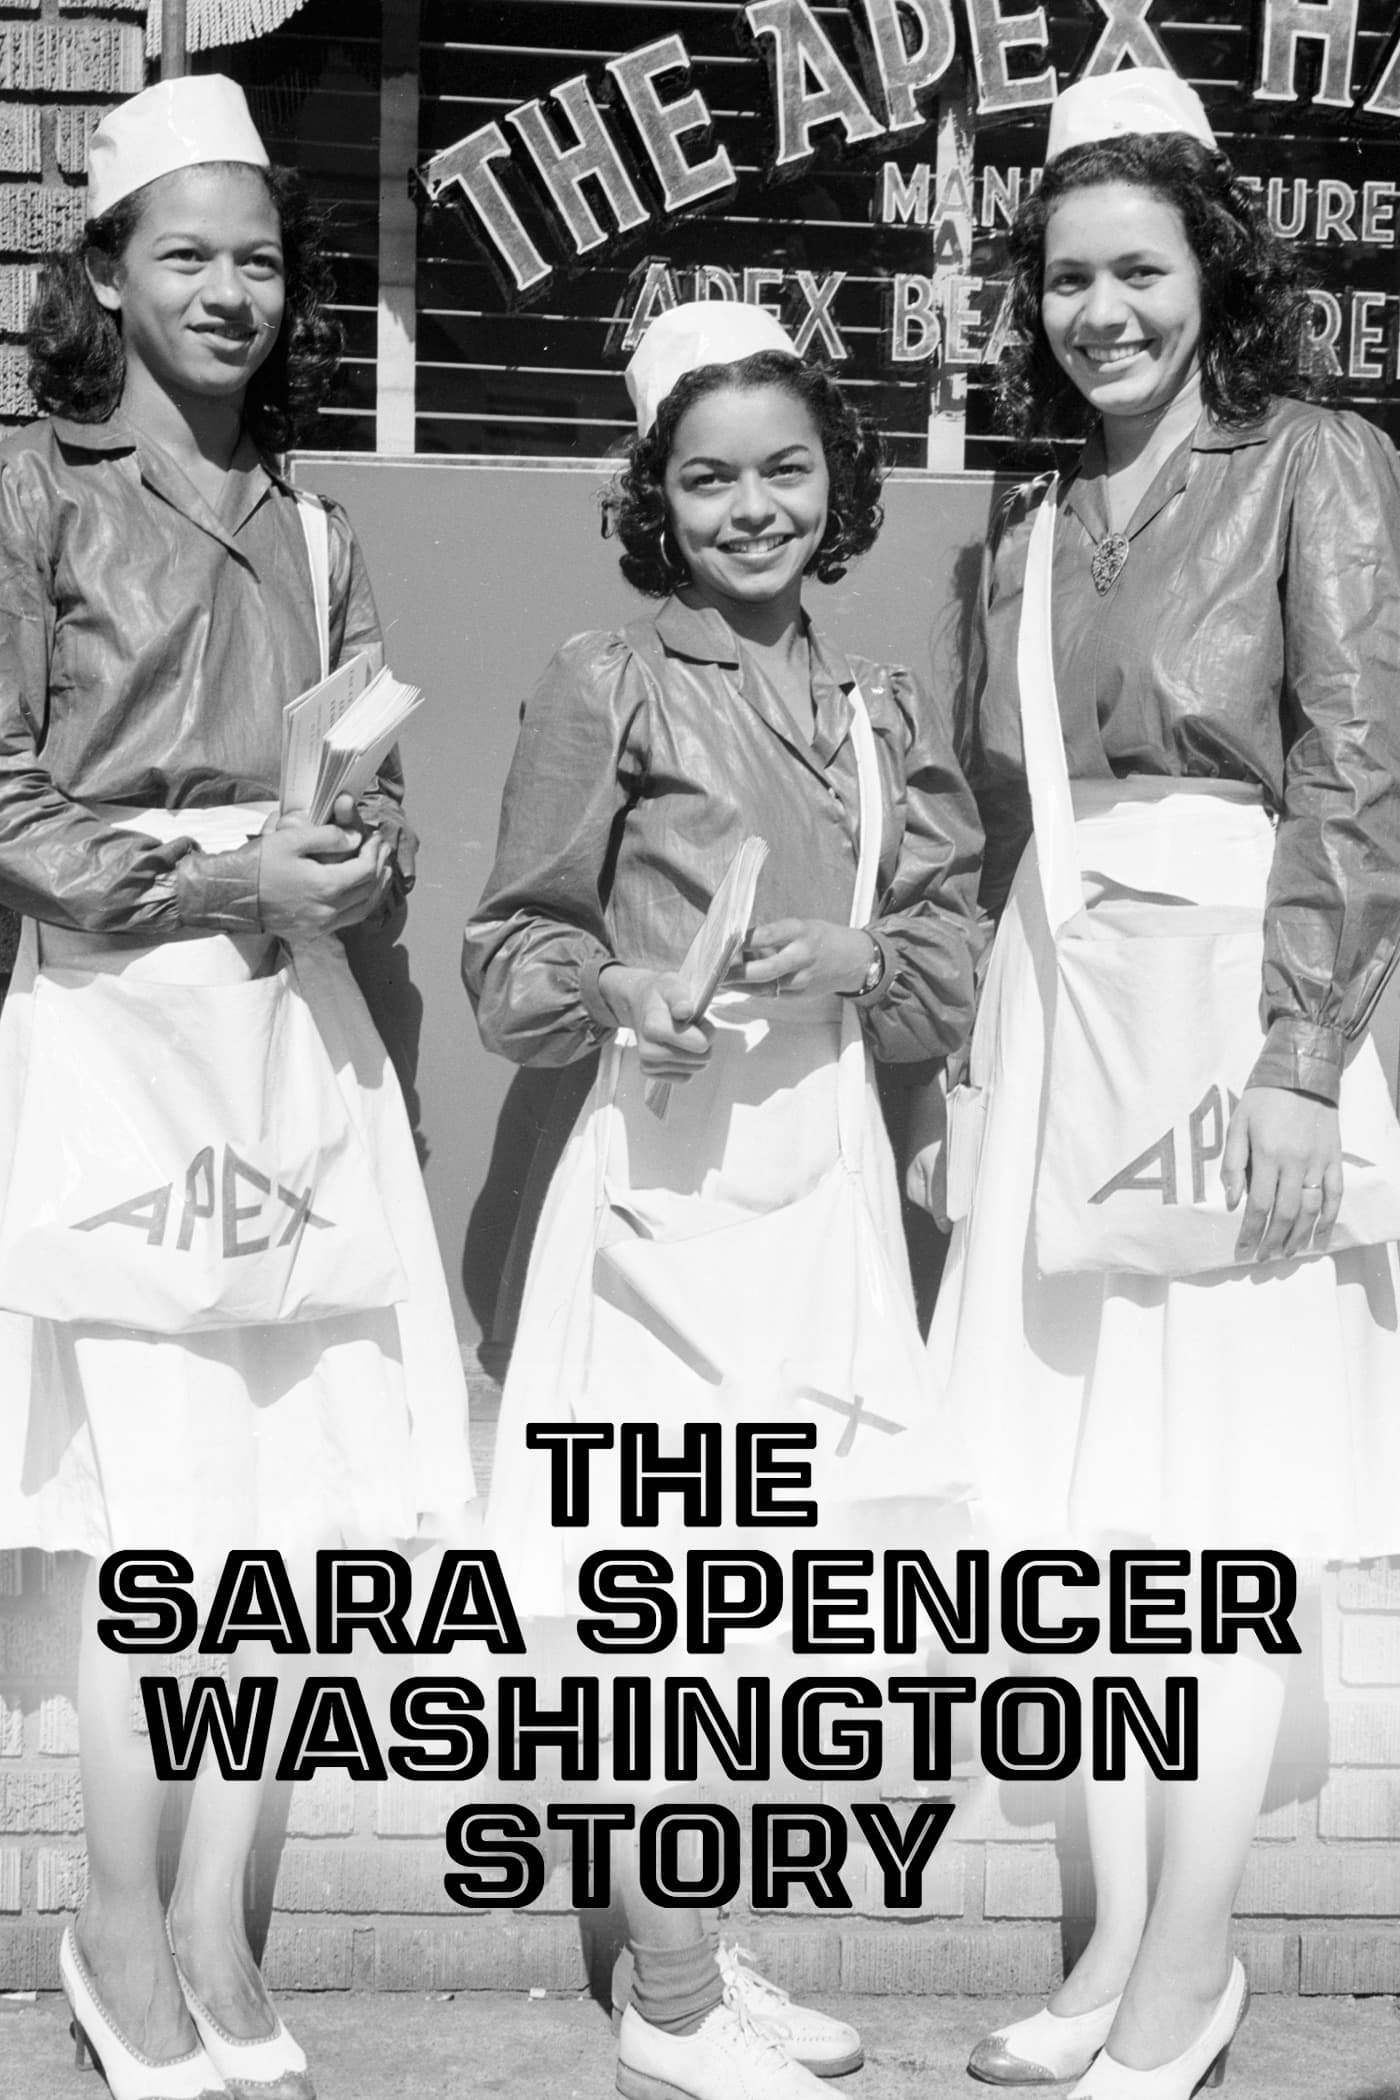 The Sara Spencer Washington Story